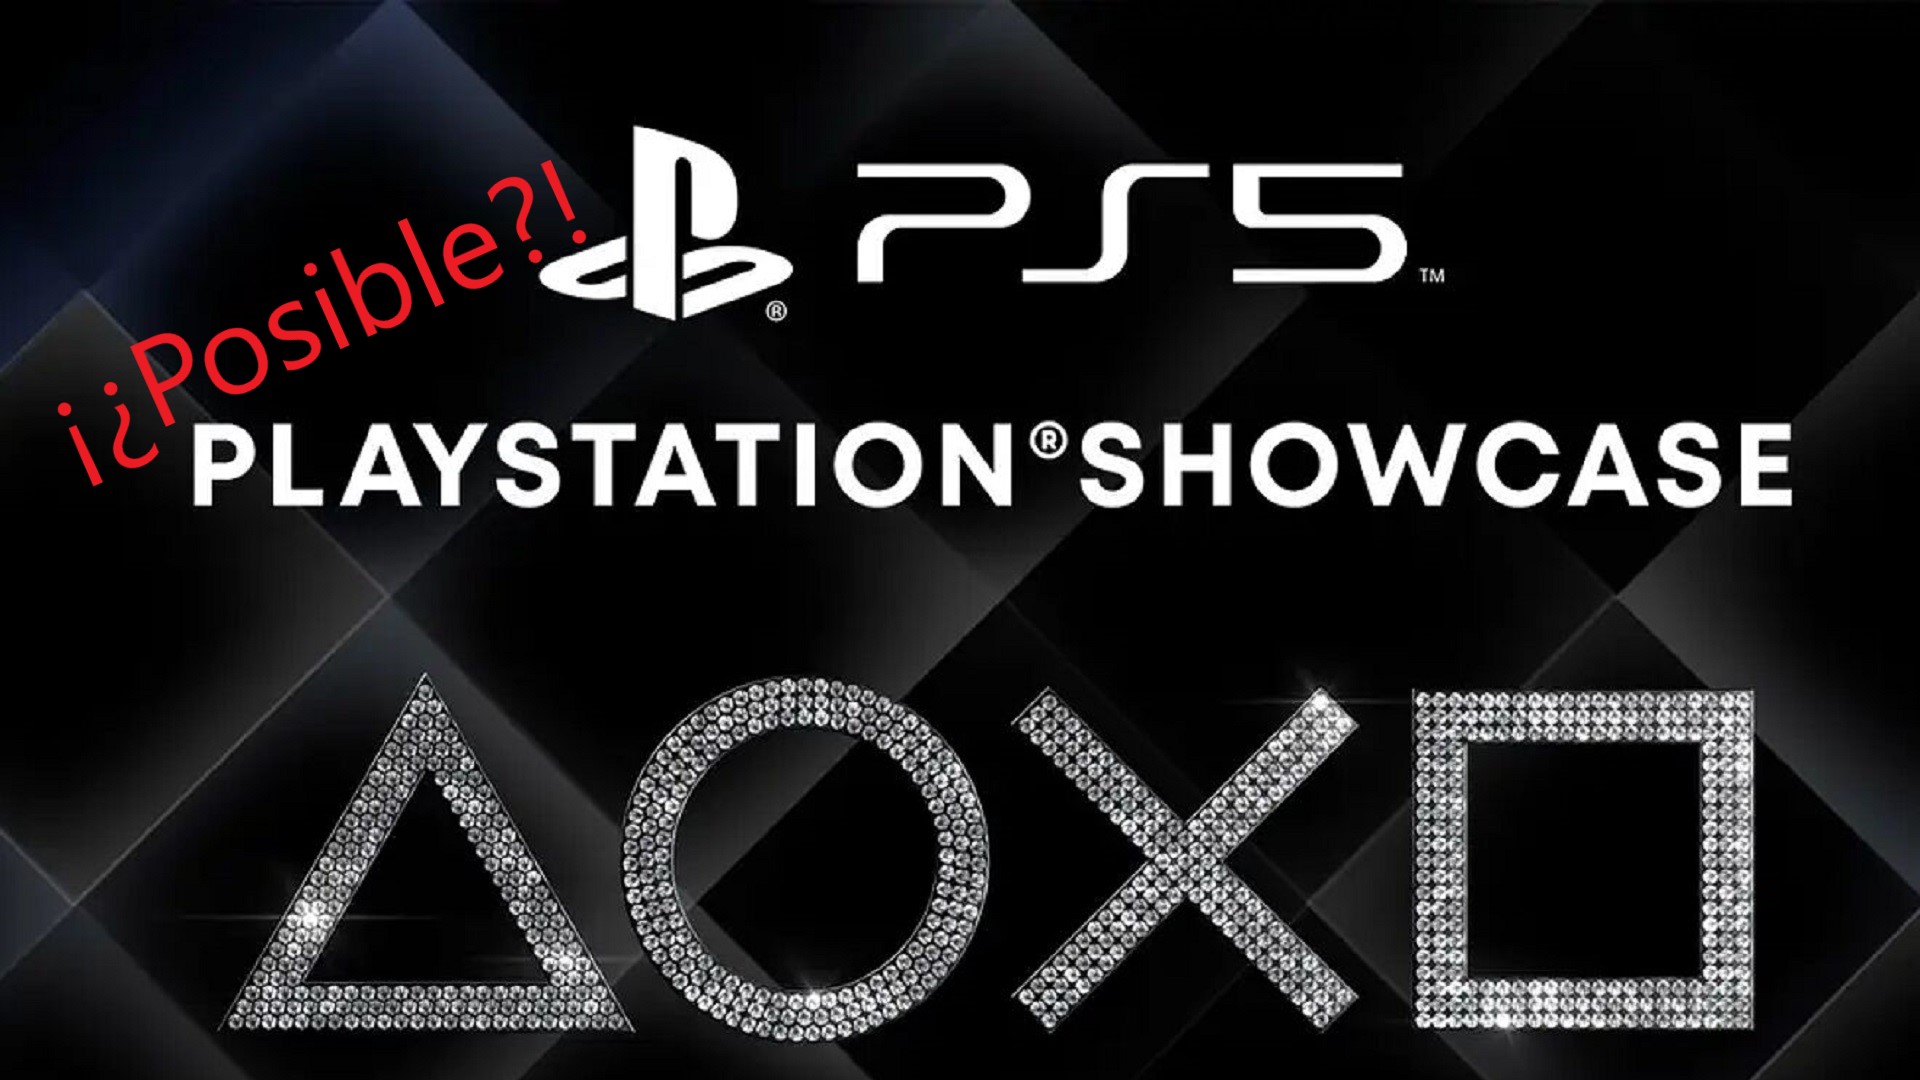 Posible Playstation Showcase